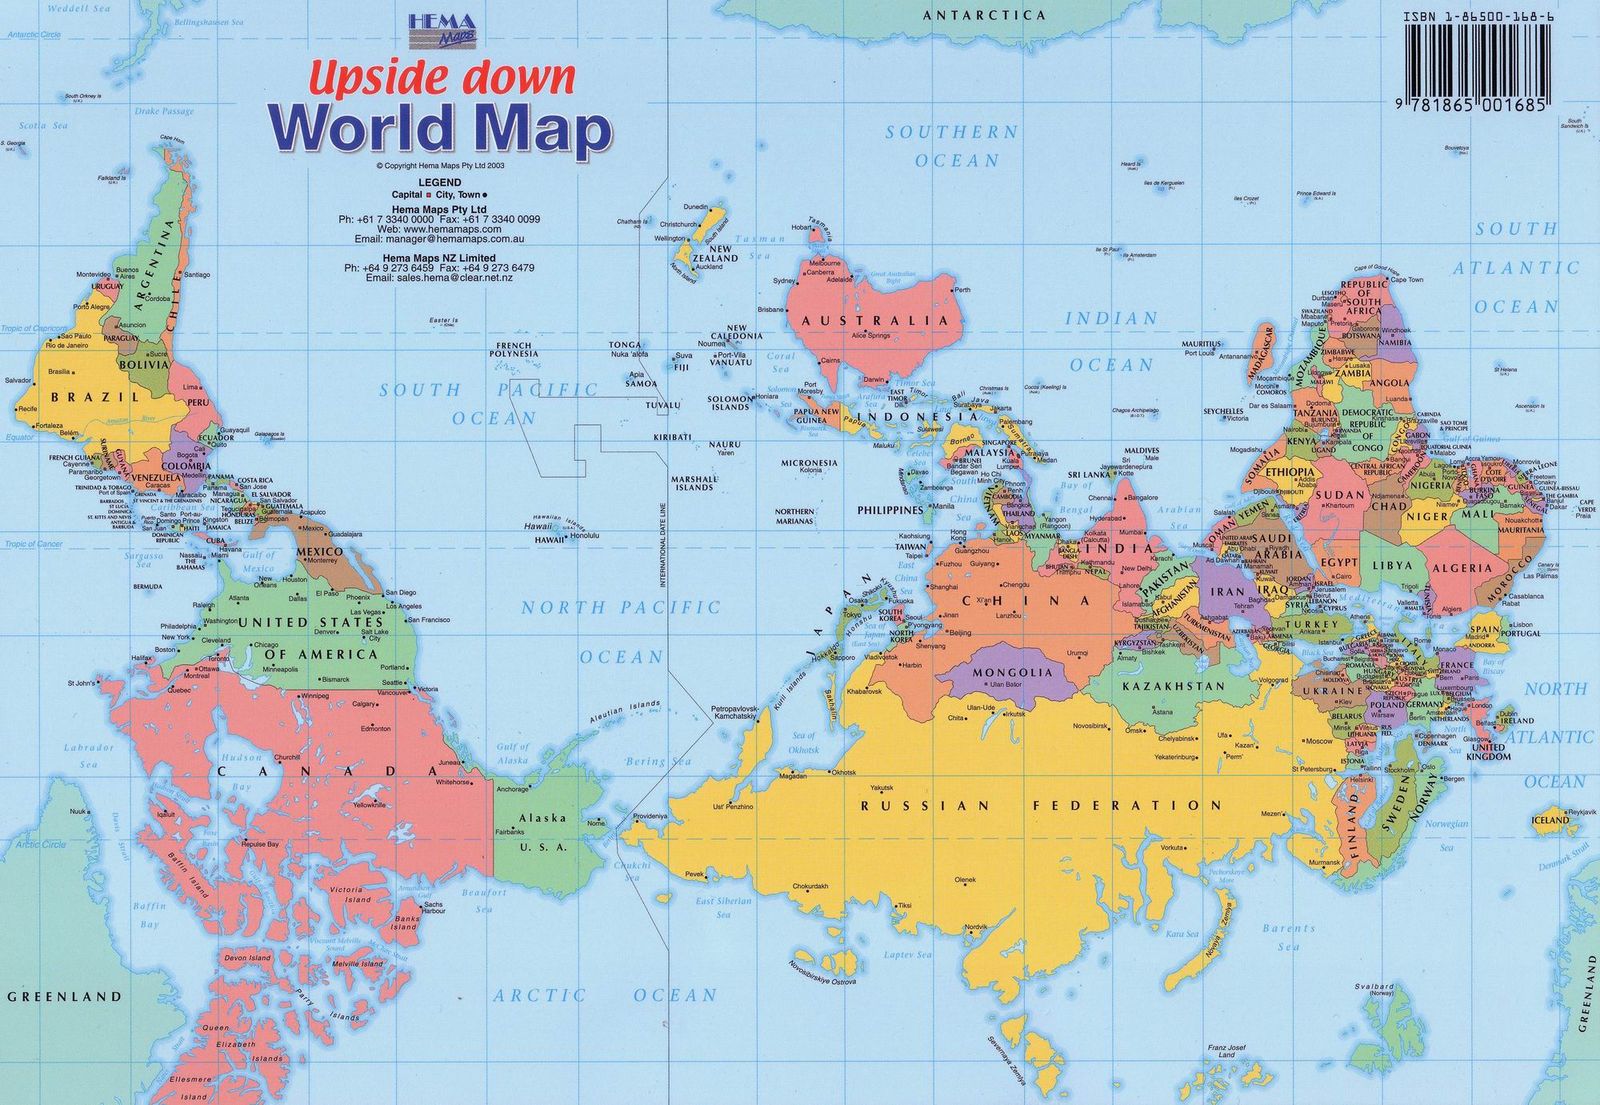 upsidedown-map-of-the-world-optimized1.jpg